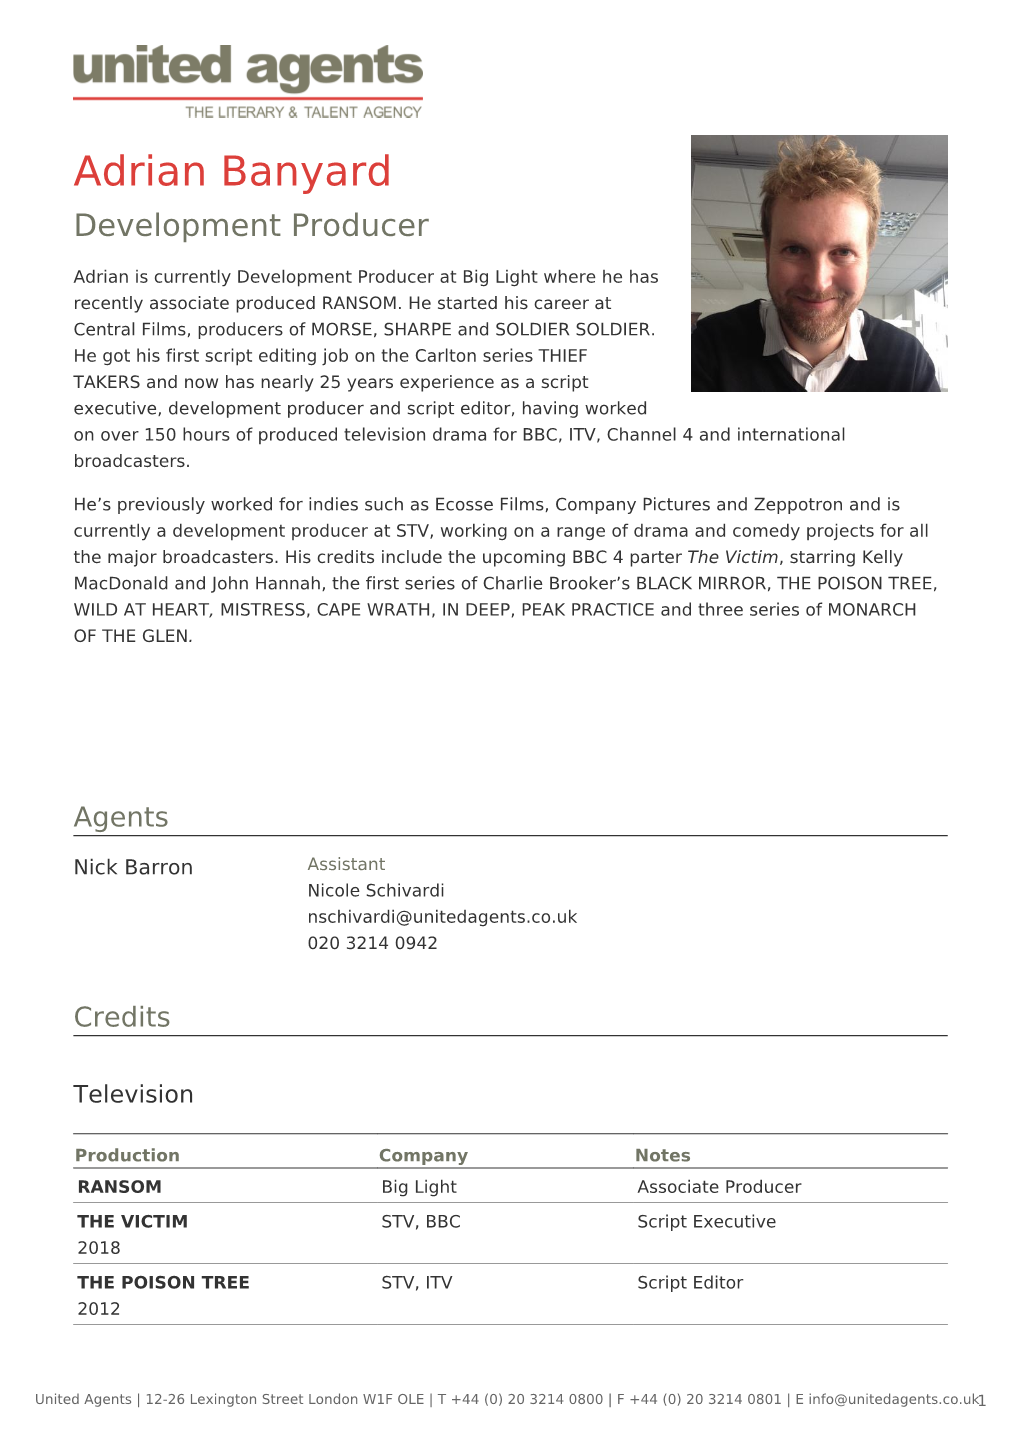 Adrian Banyard Development Producer